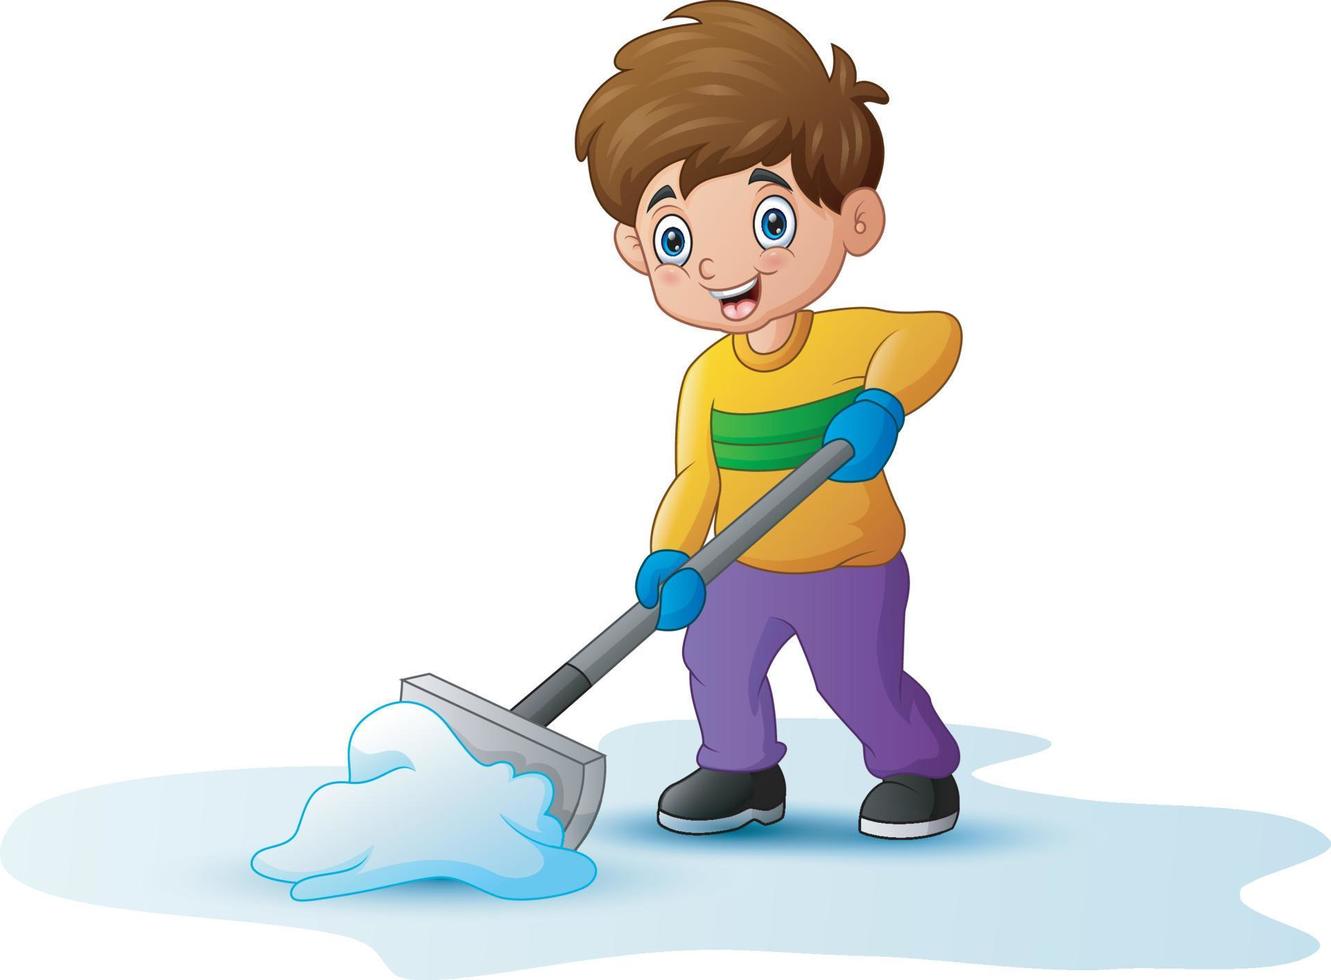 Cartoon boy cleaning snow using a shovel vector